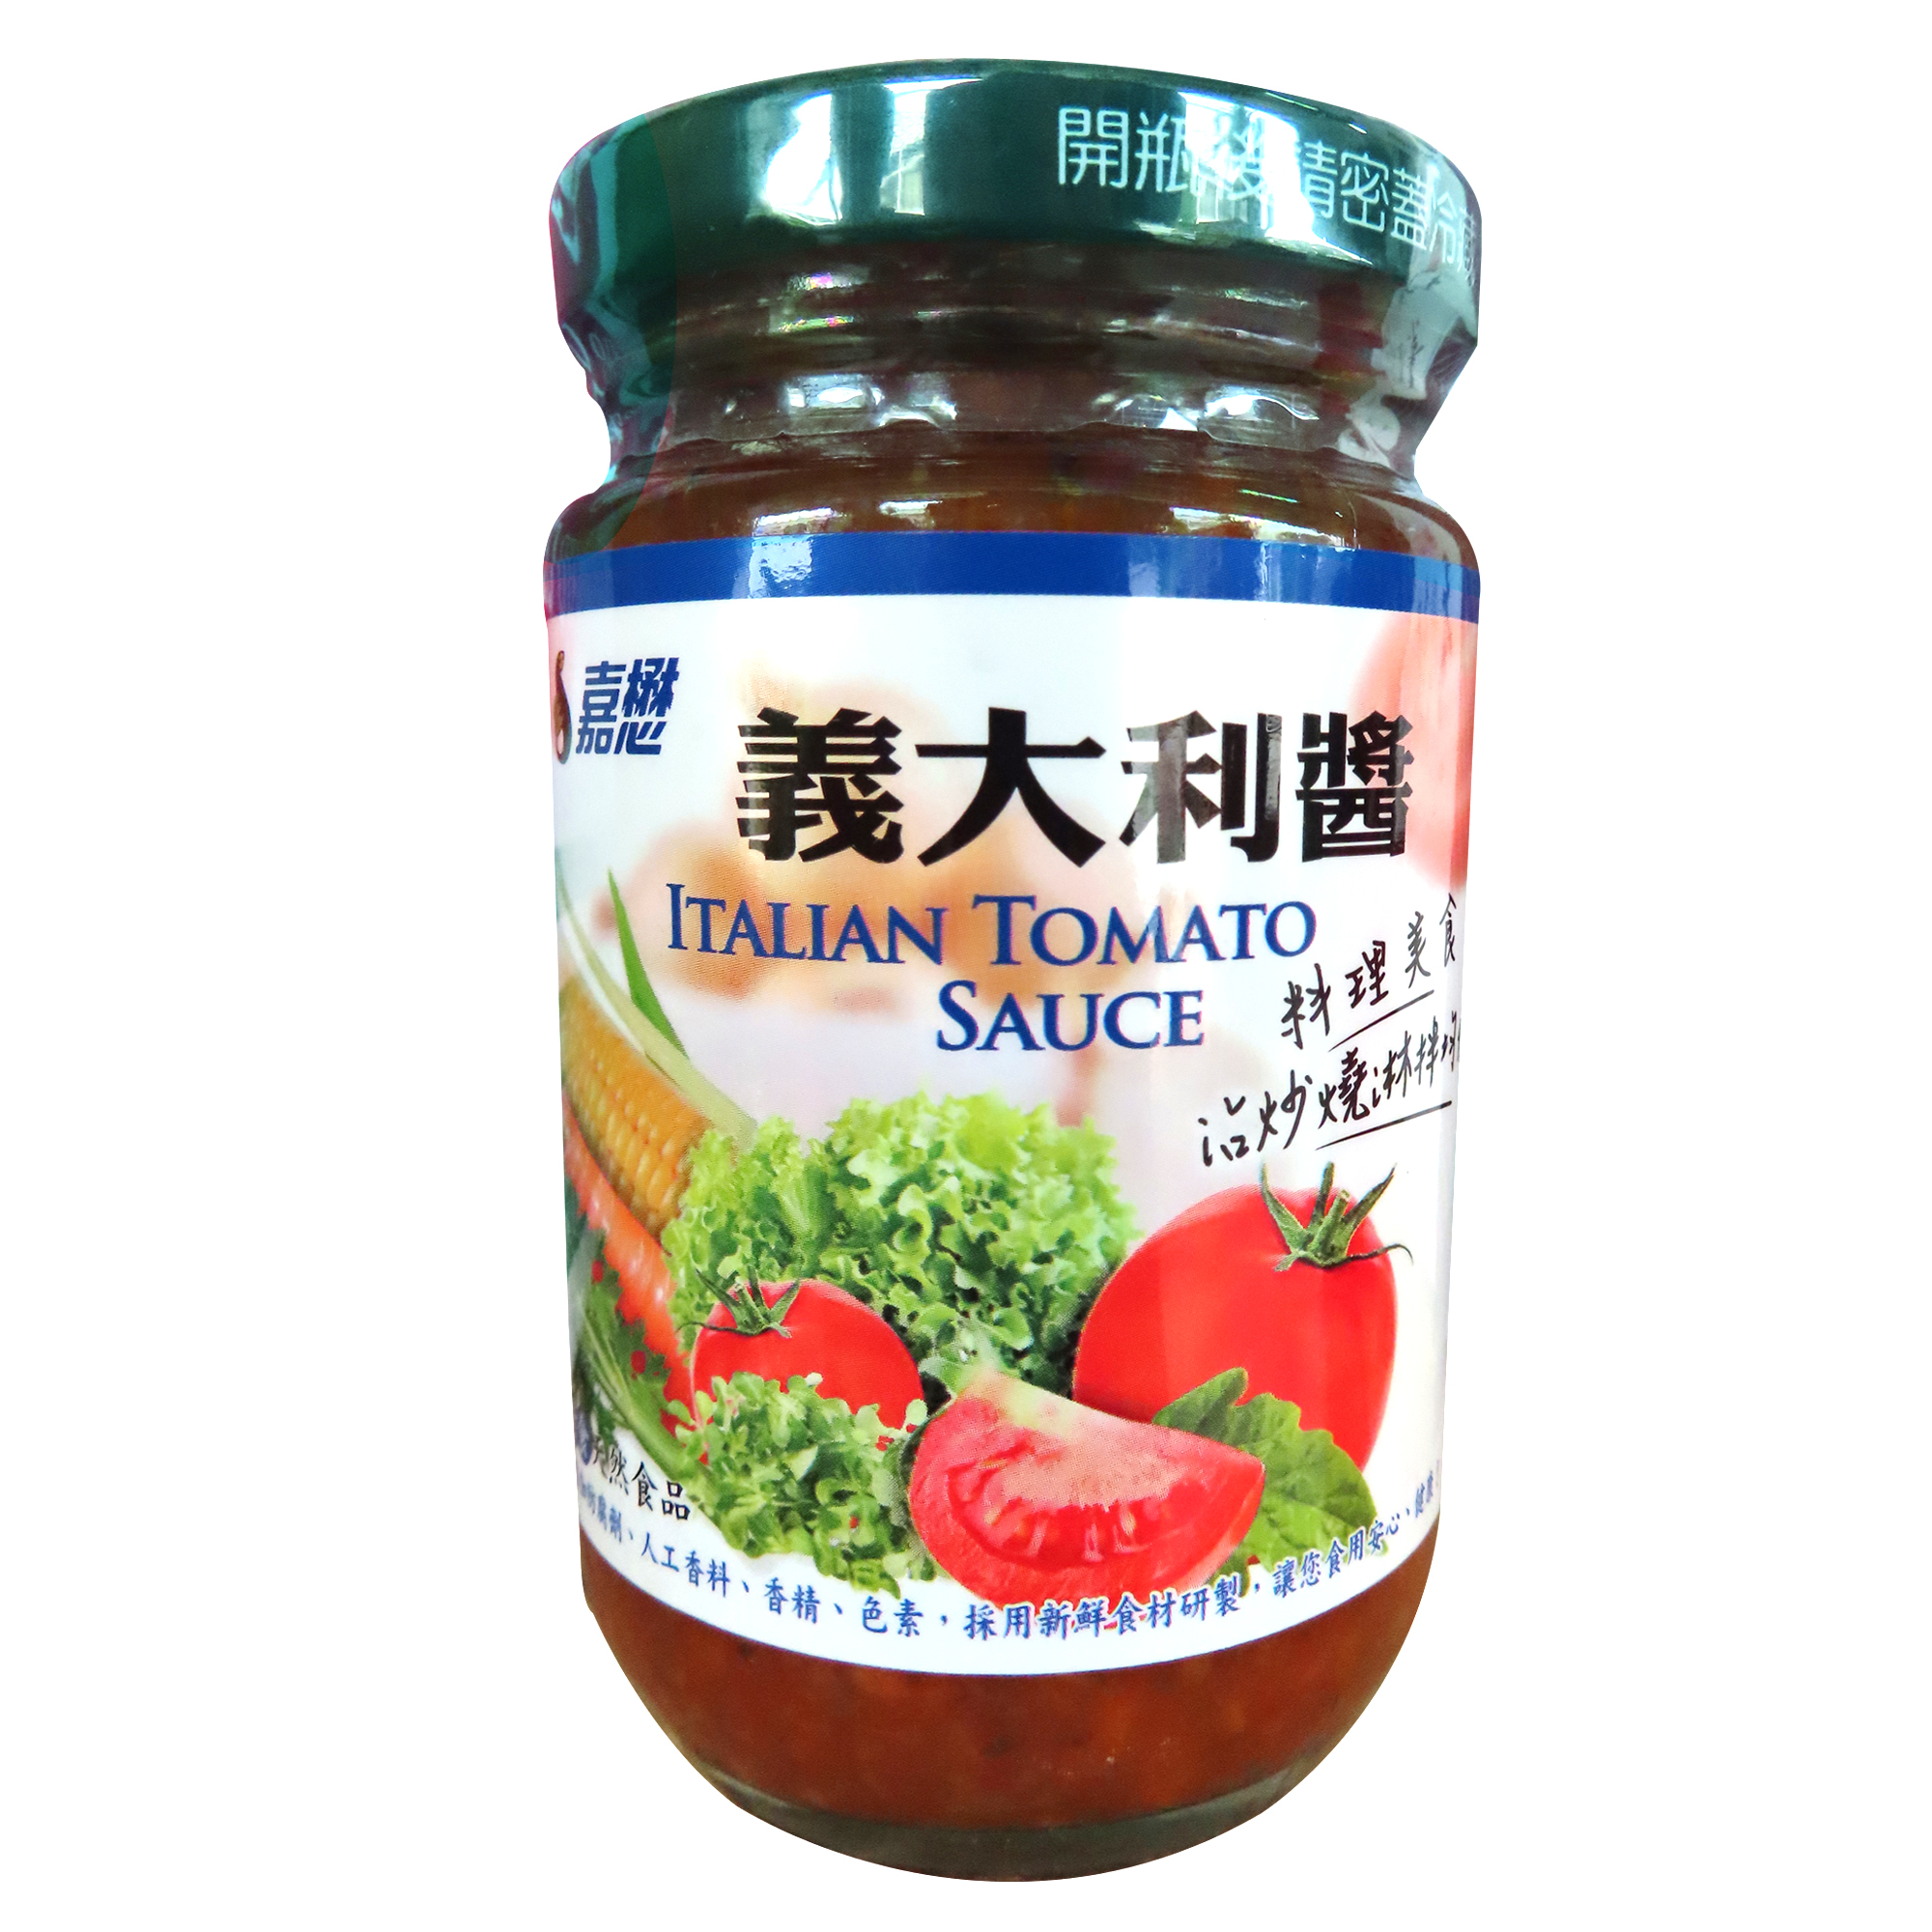 Image Italian Tomato Sauce Can 嘉懋-意大利酱(罐头) 280grams